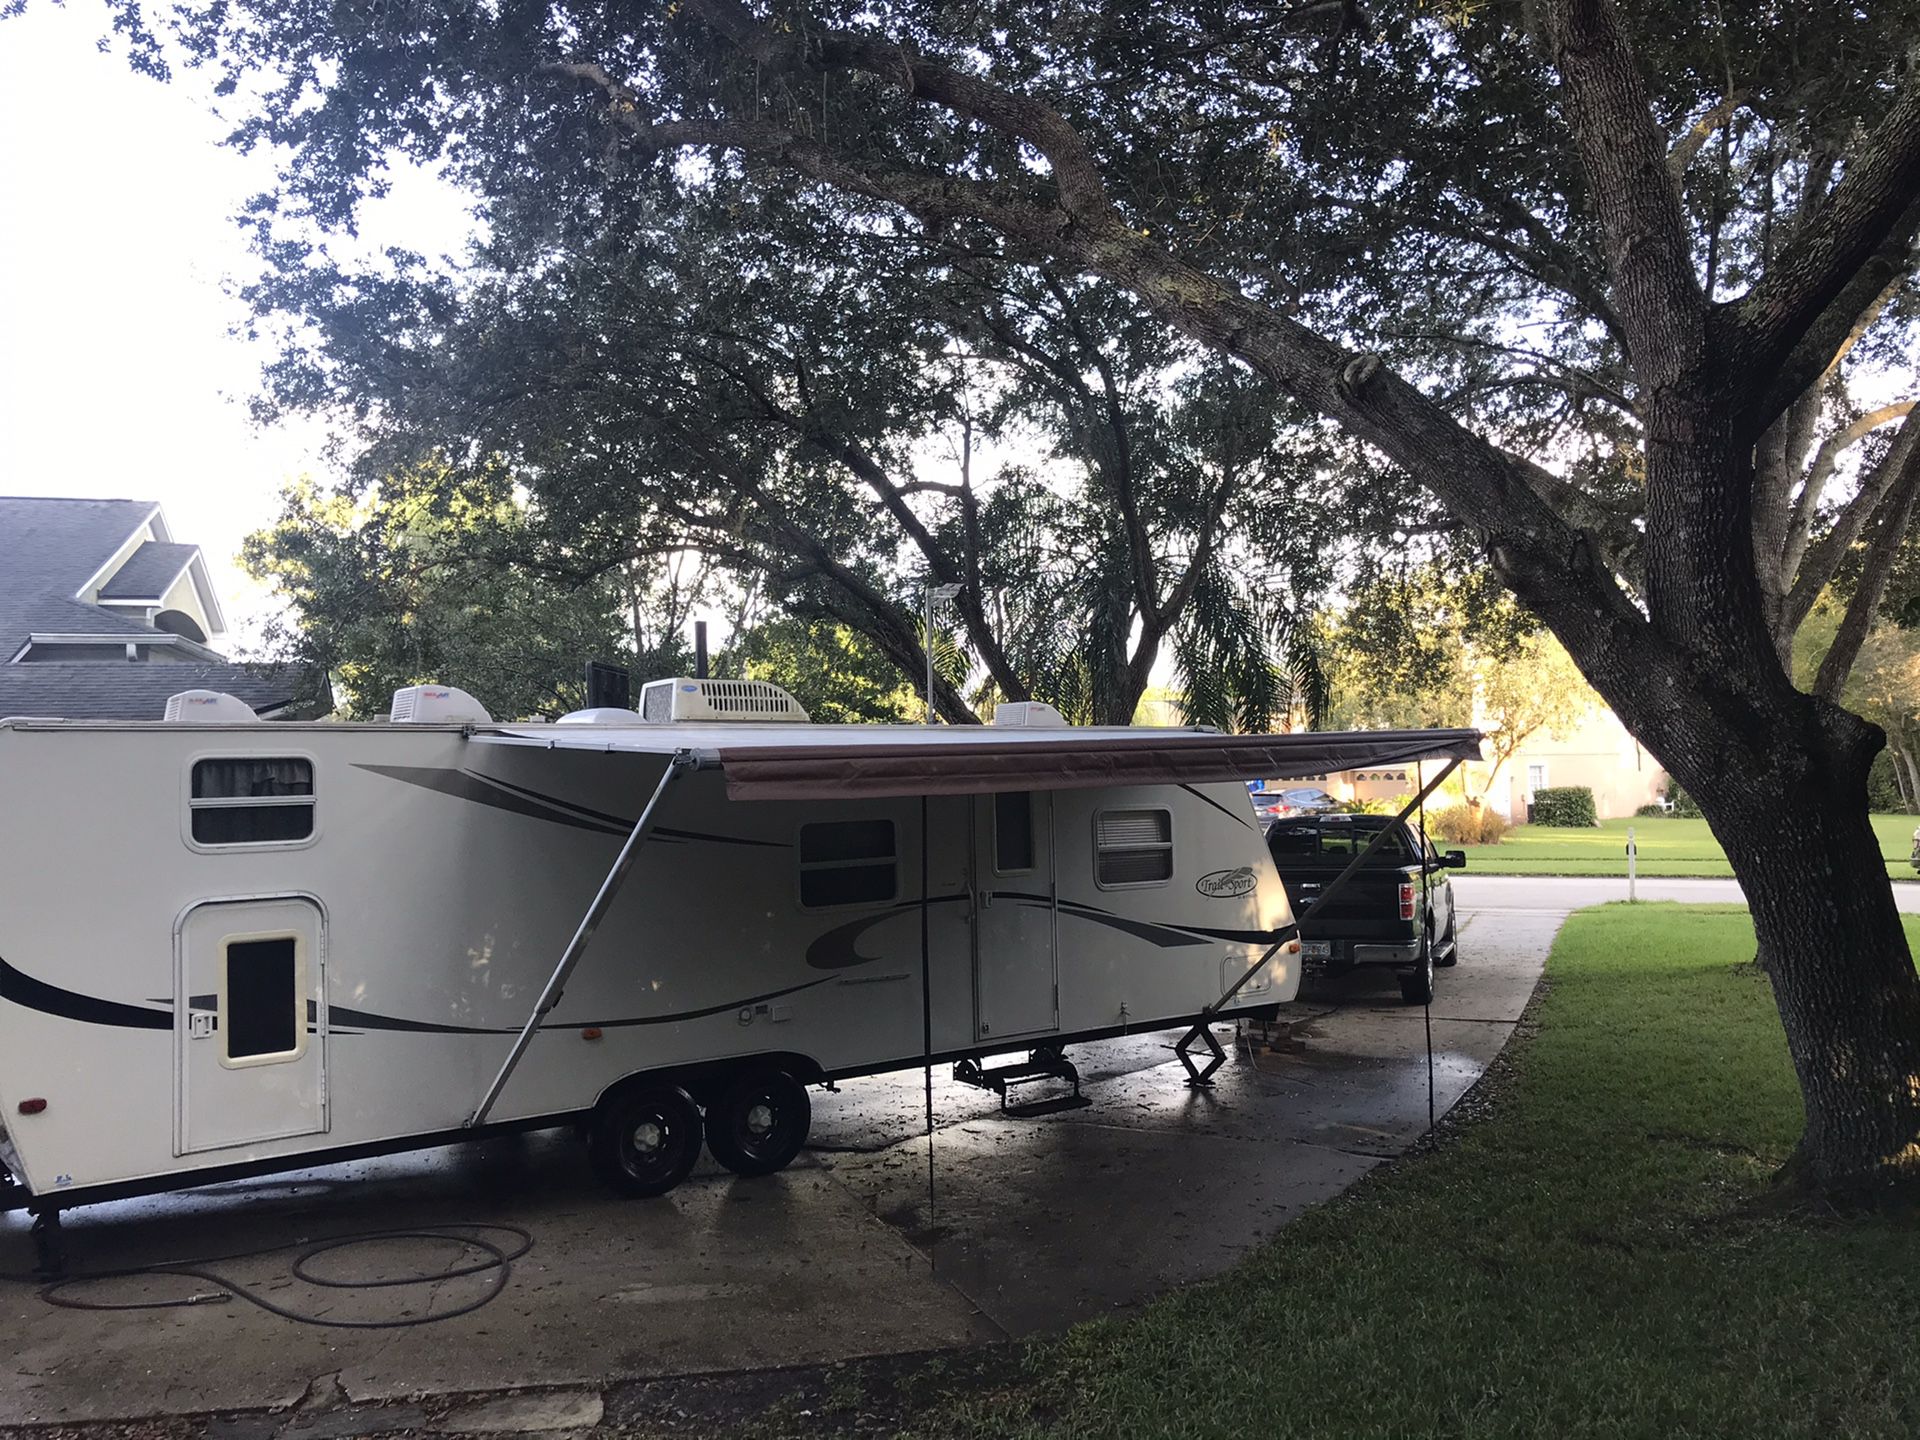 RV bunkhouse camper trailer